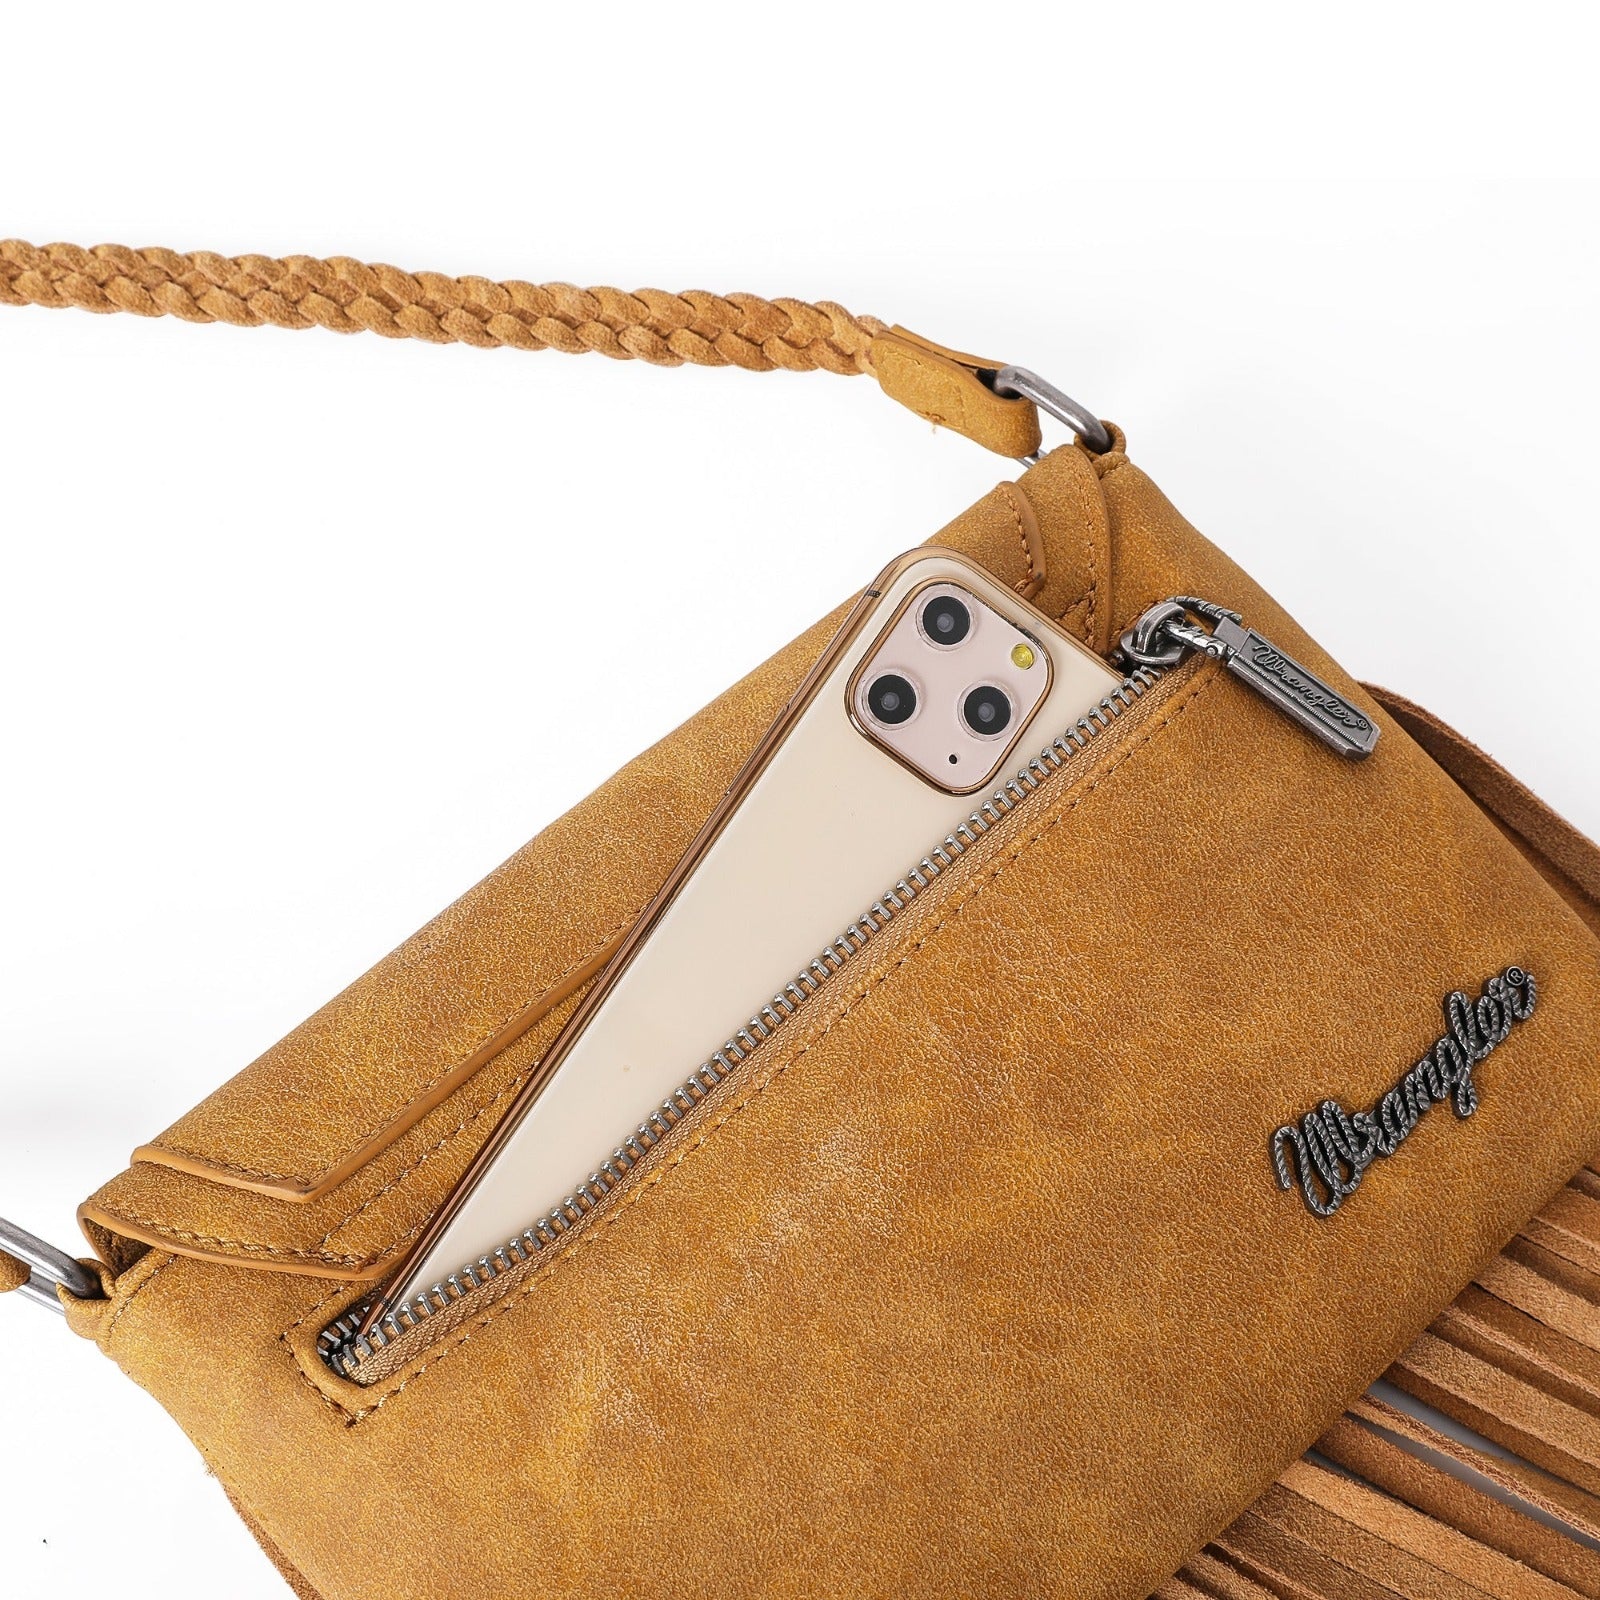 Wrangler Genuine Leather Fringe Crossbody Bag (Wrangler By Montana West) - Cowgirl Wear